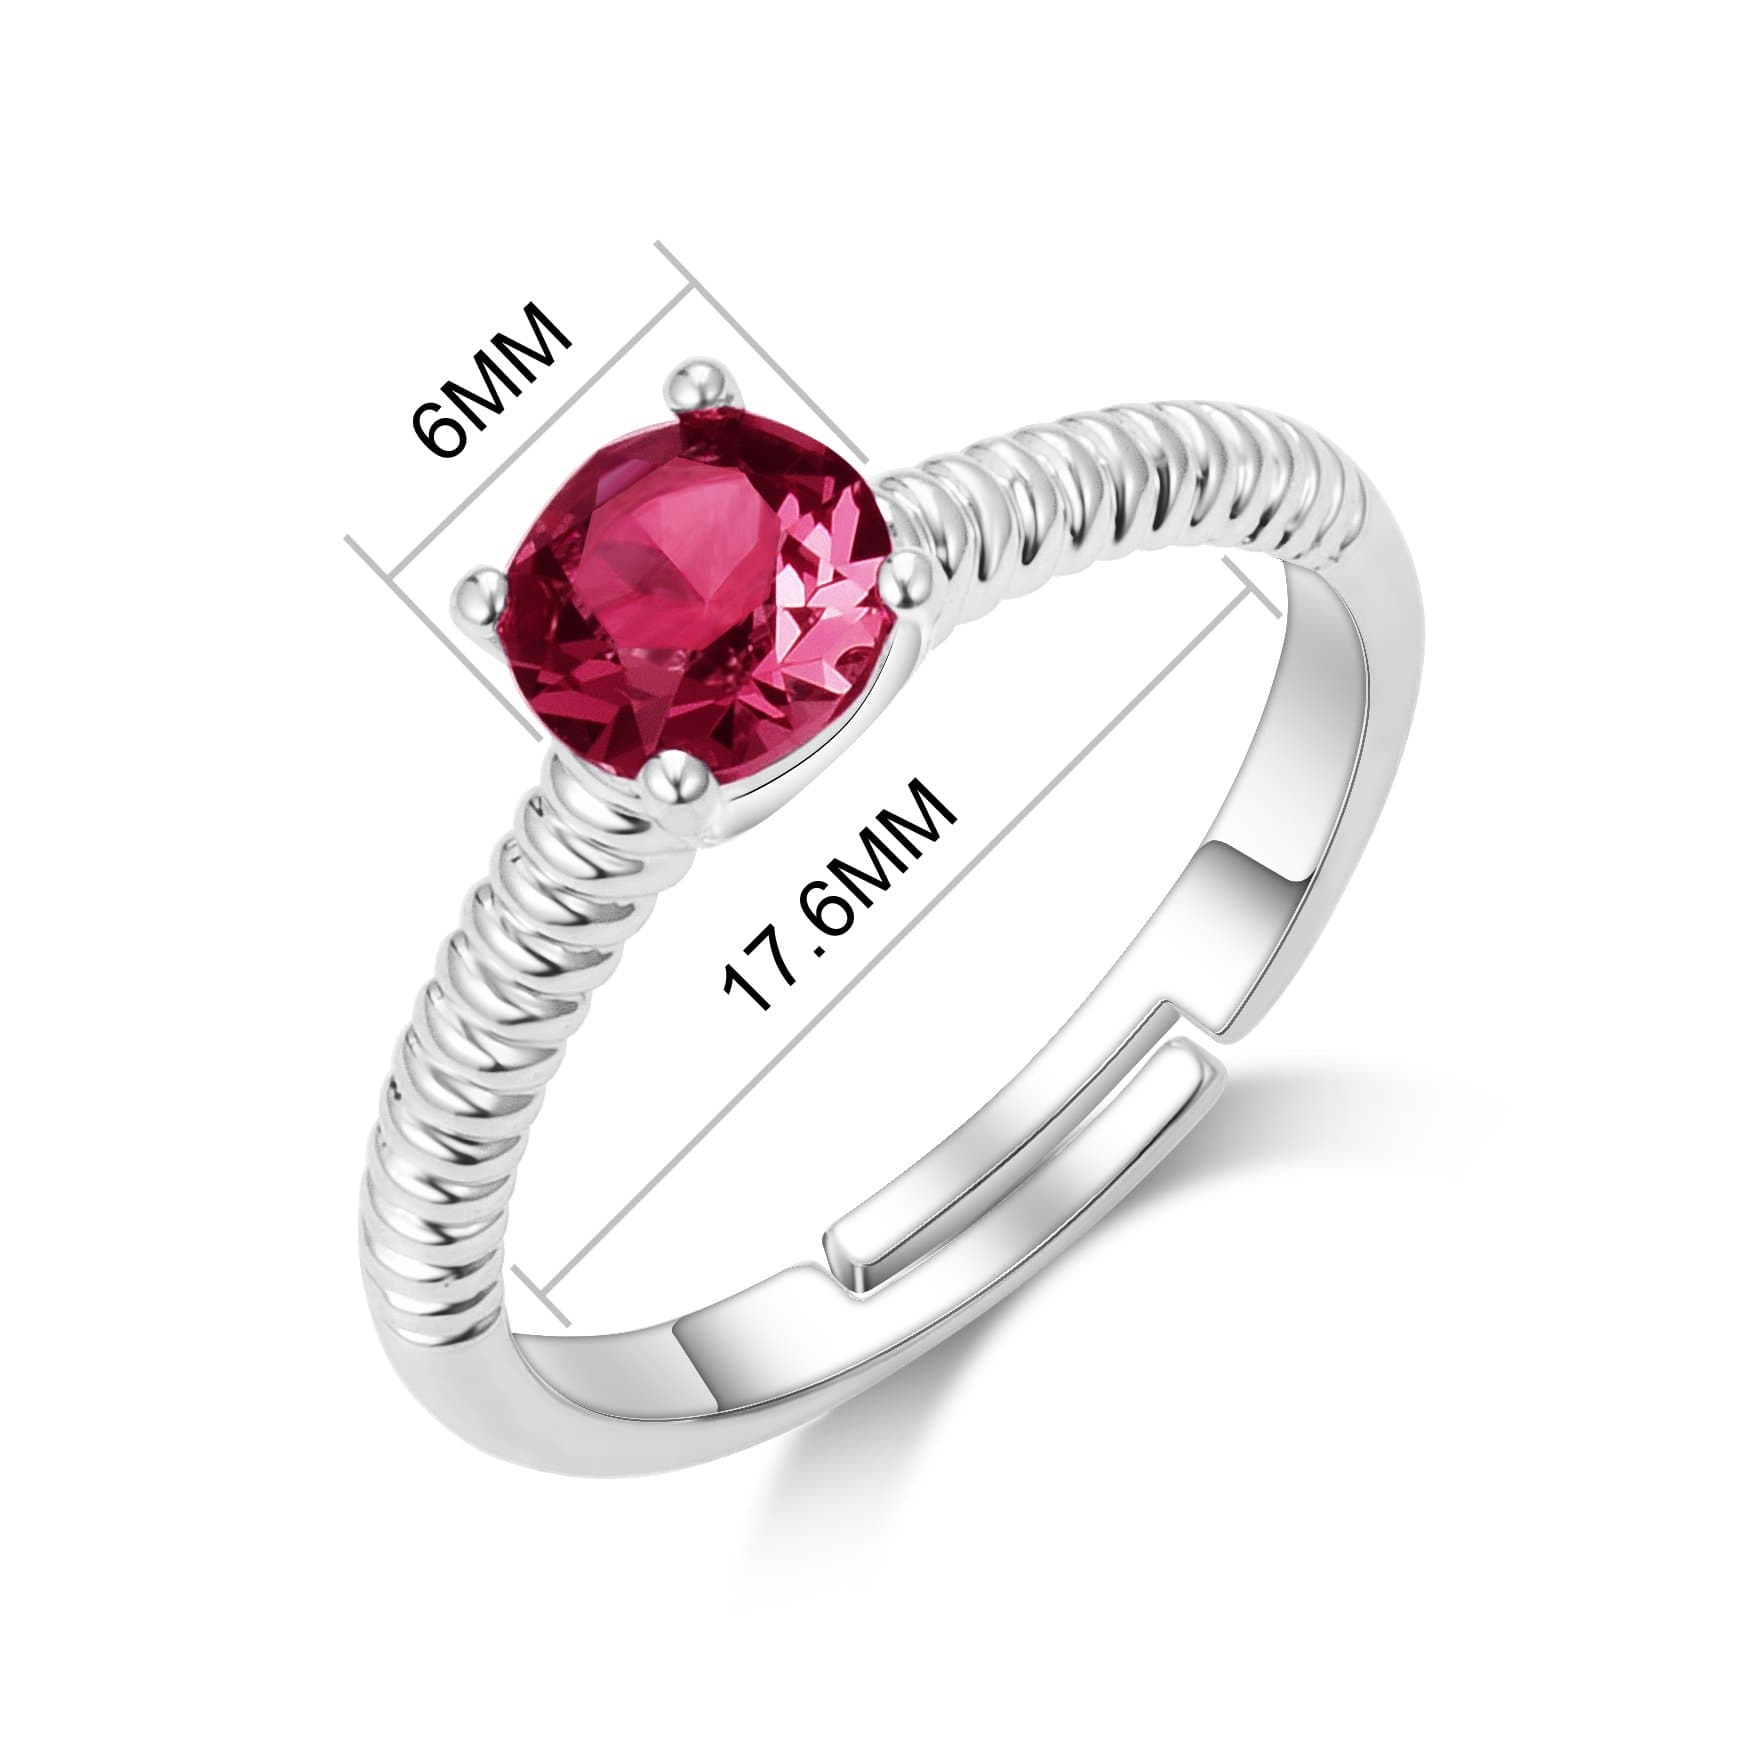 January (Garnet) Adjustable Birthstone Ring Created with Zircondia® Crystals